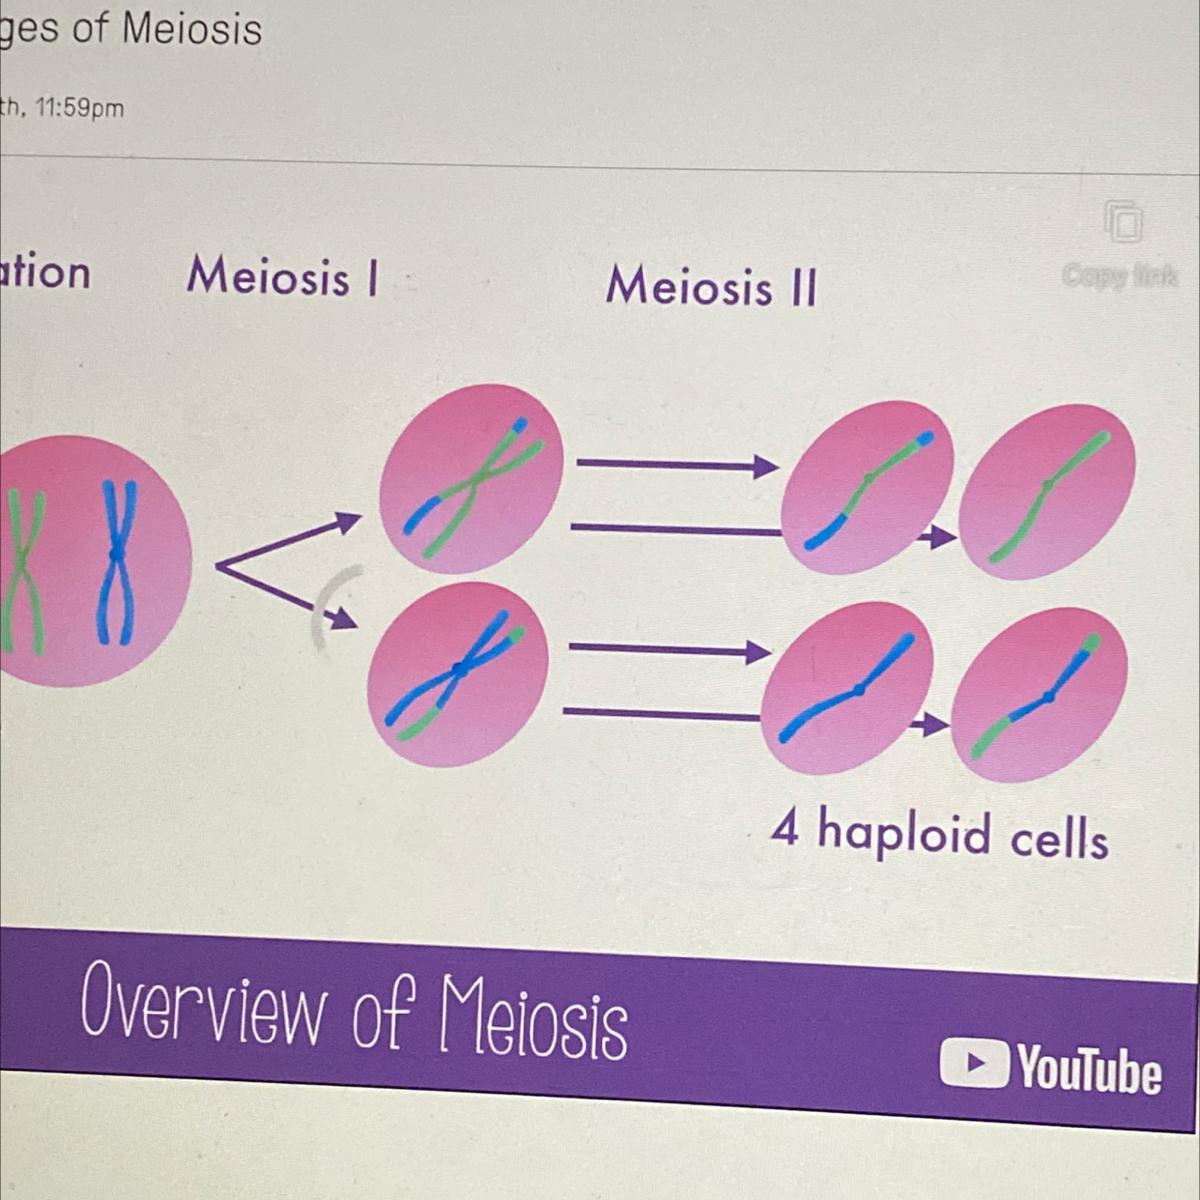 Meiosis CreatesA. 2 Daughter CellsB. 4 Gametes